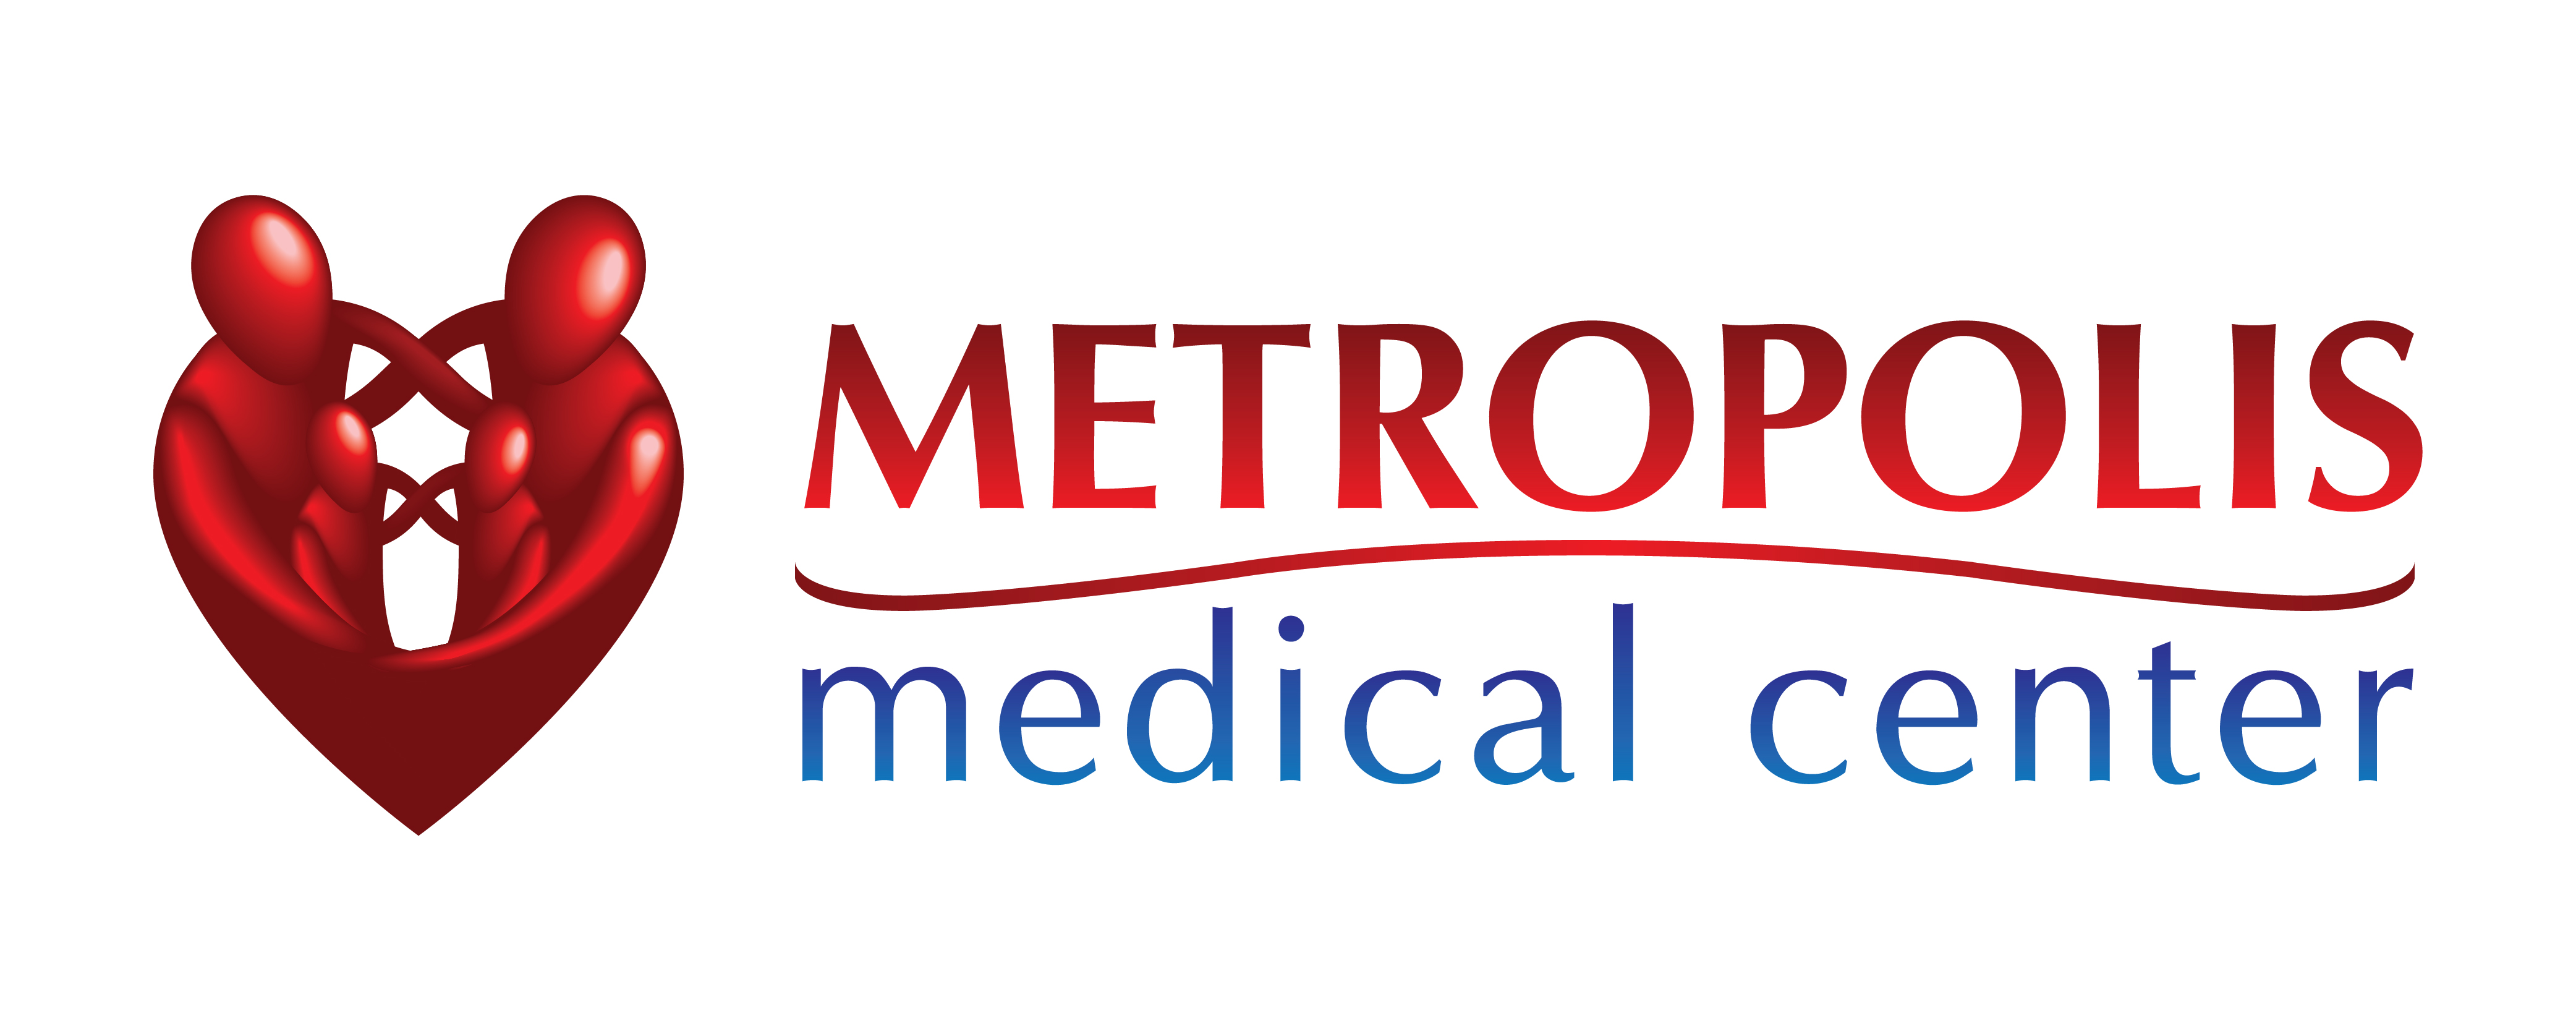 metropolismedical